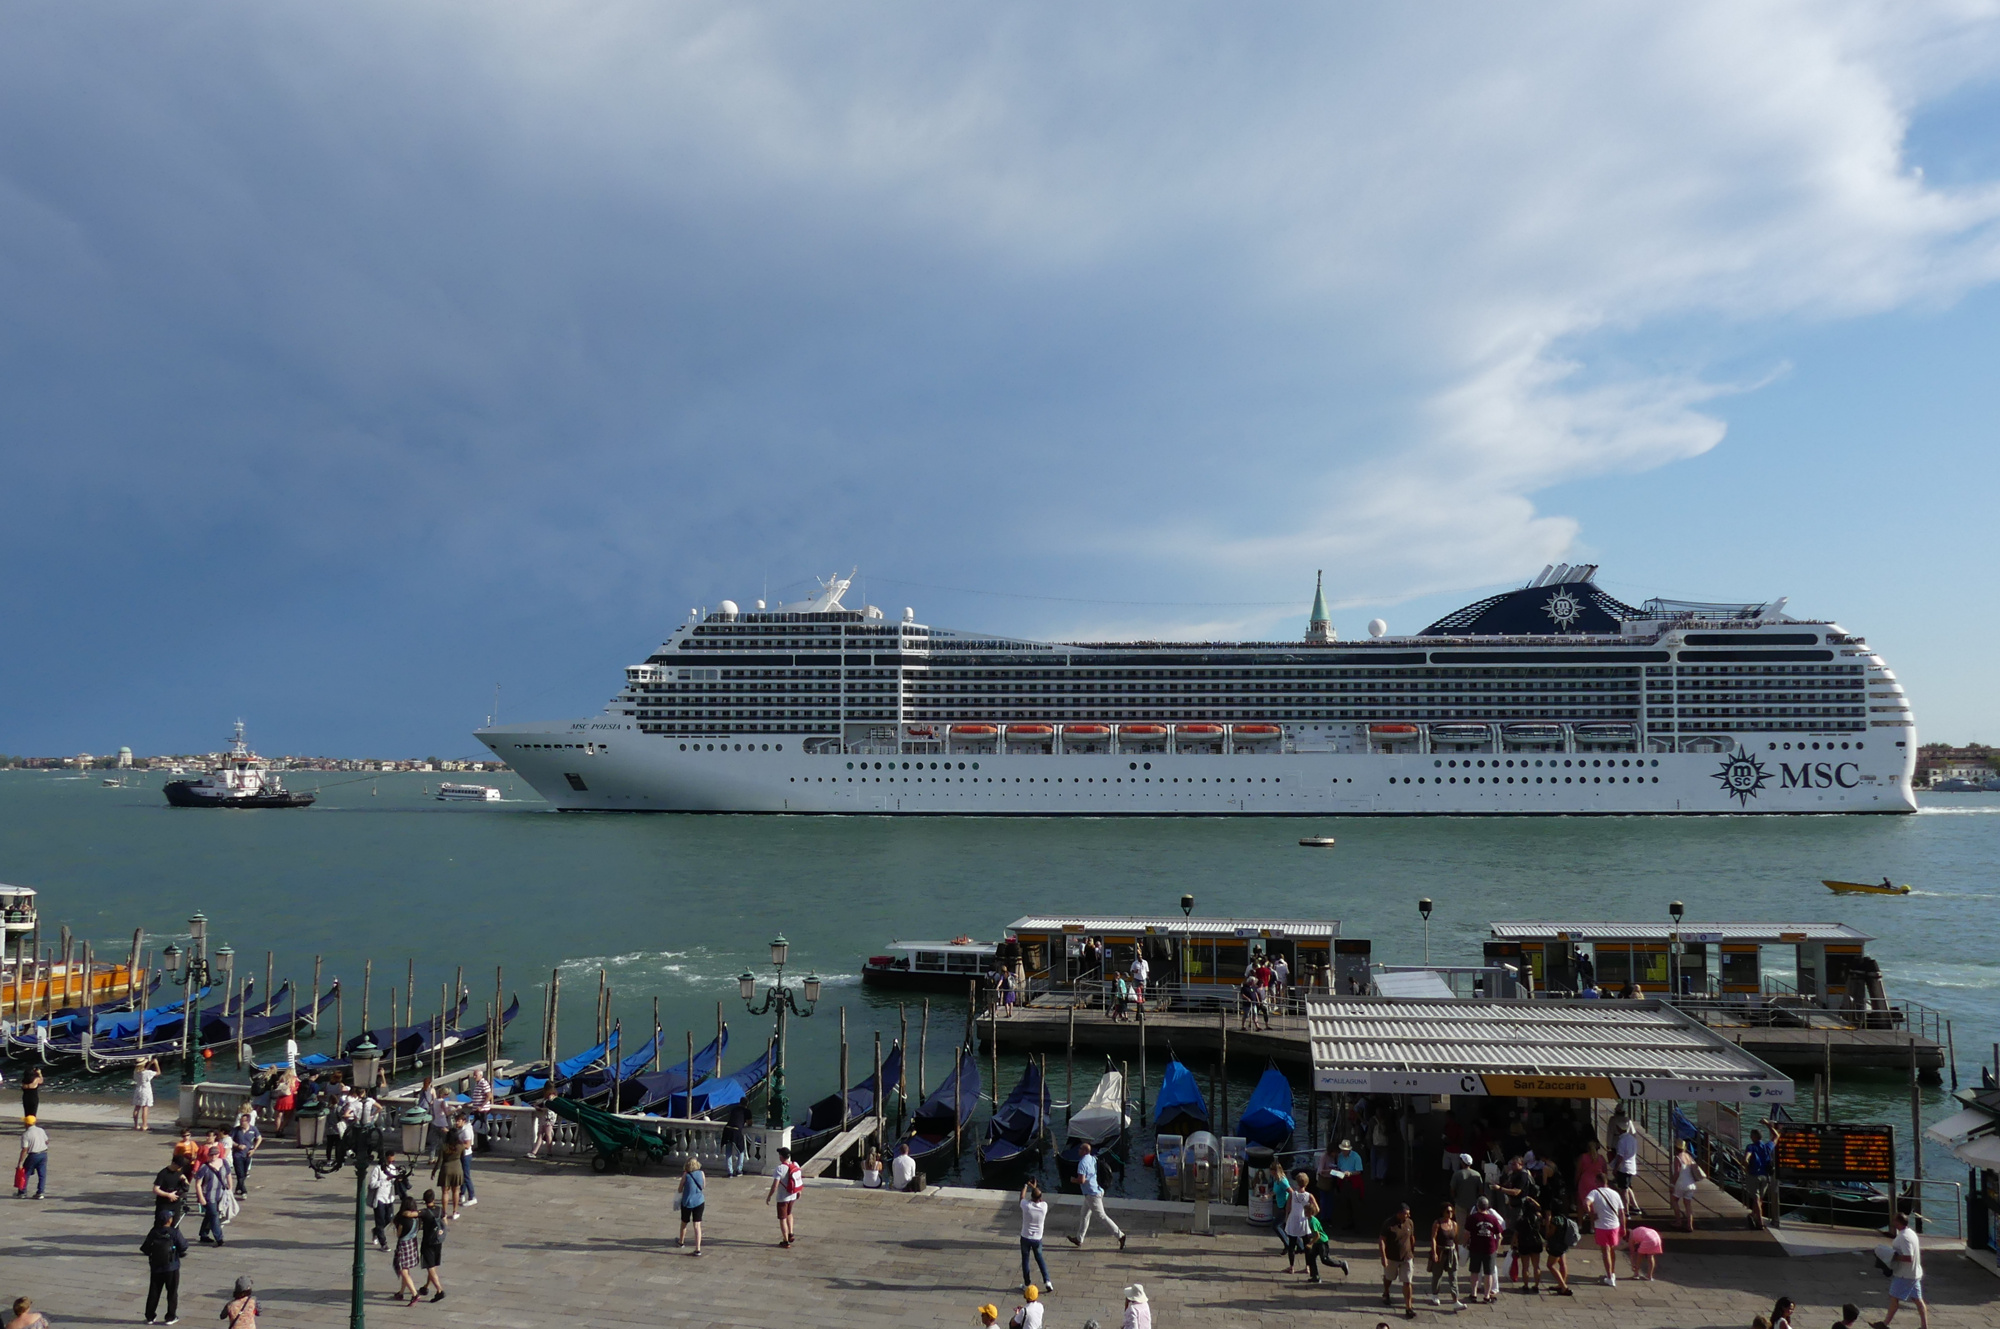 msc-poesia-cruise-ship-2017.jpg